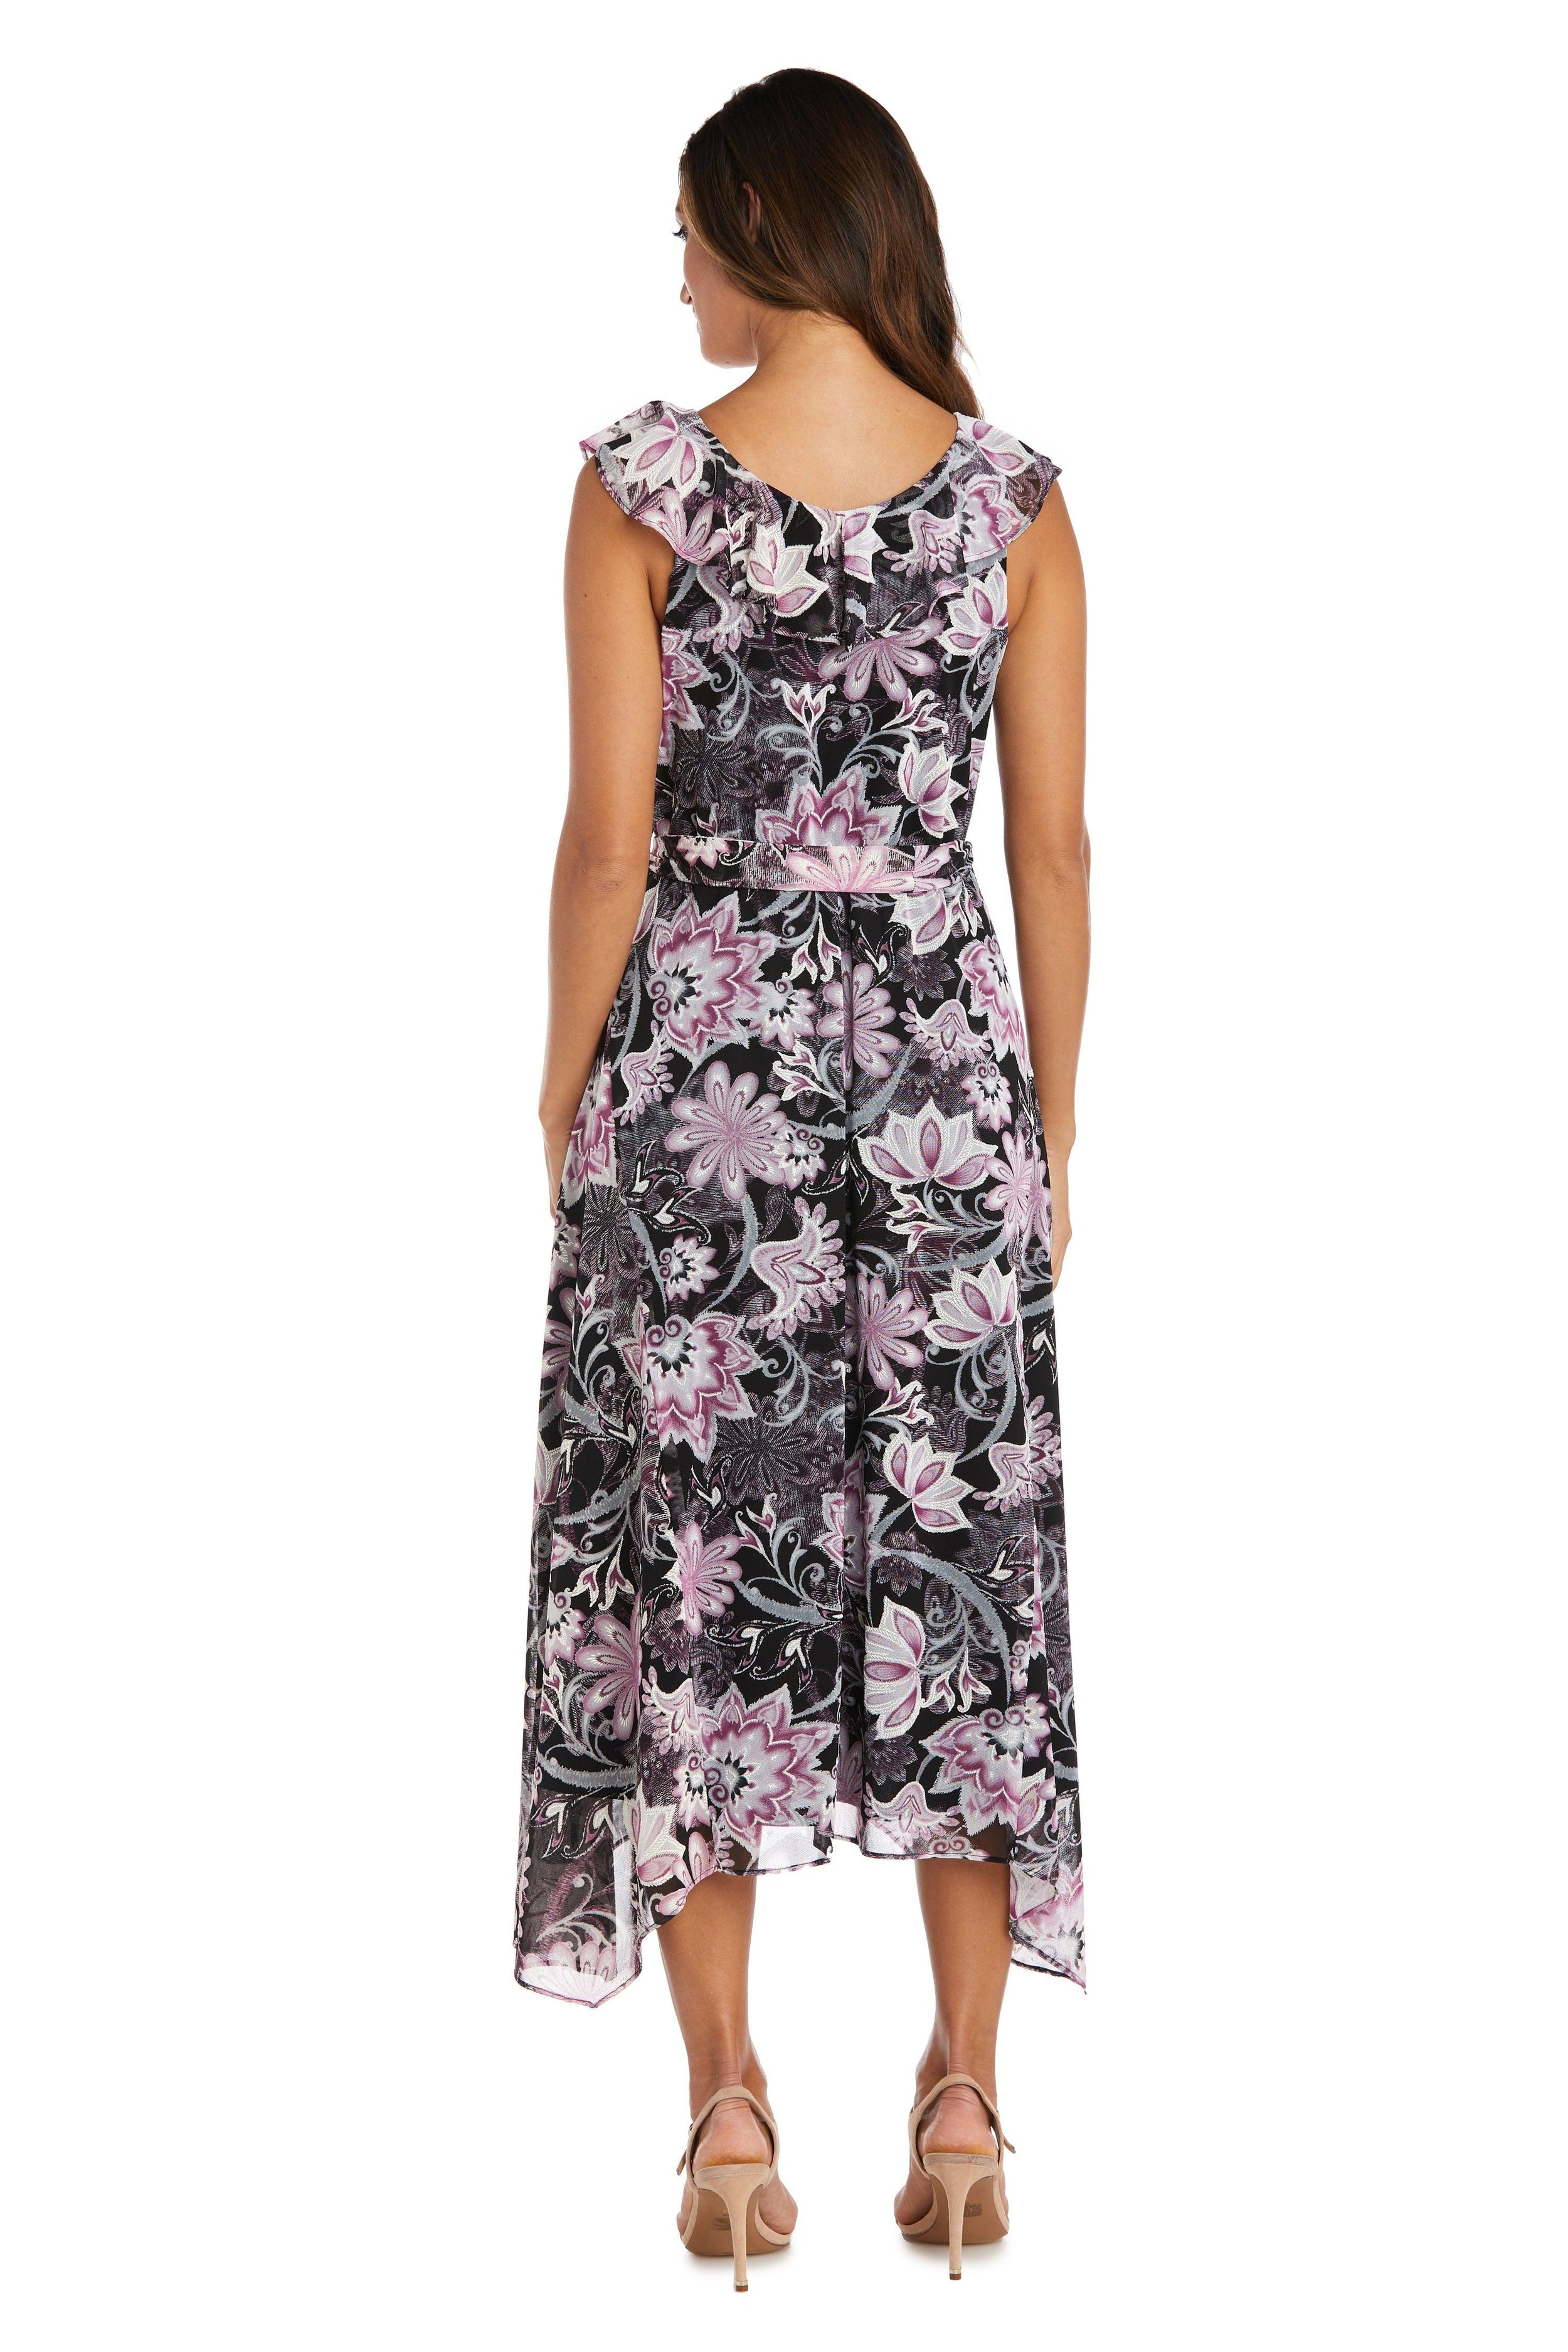 R&M Richards 9254 High Low Floral Print Dress